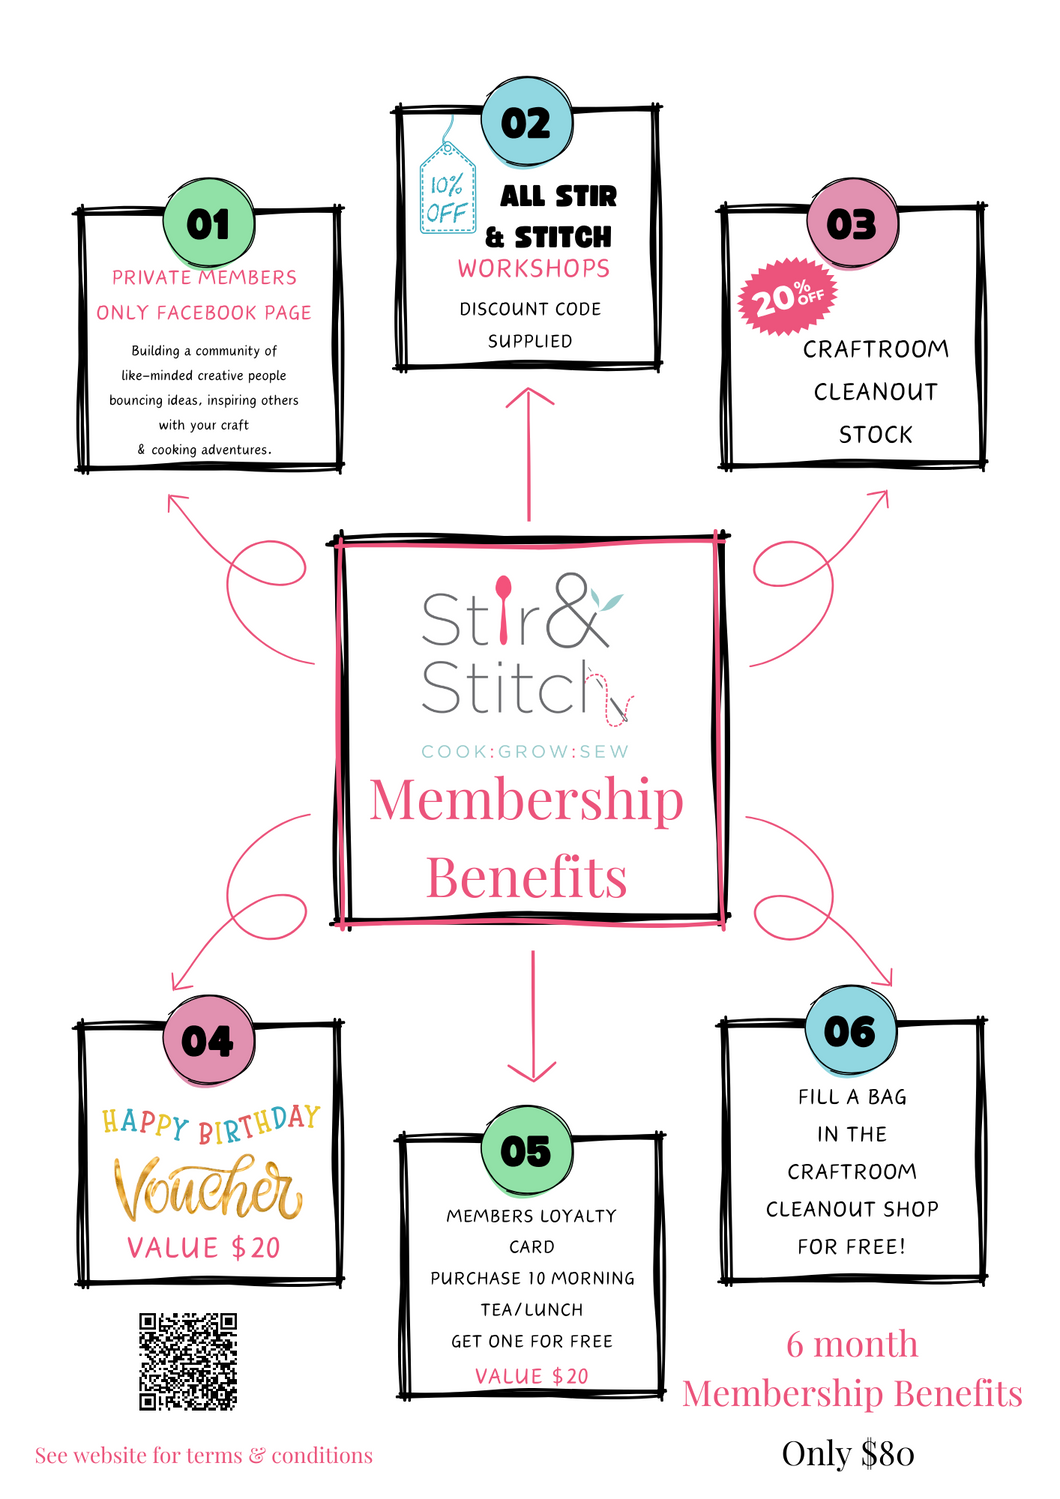 The Stir & Stitch Community Membership